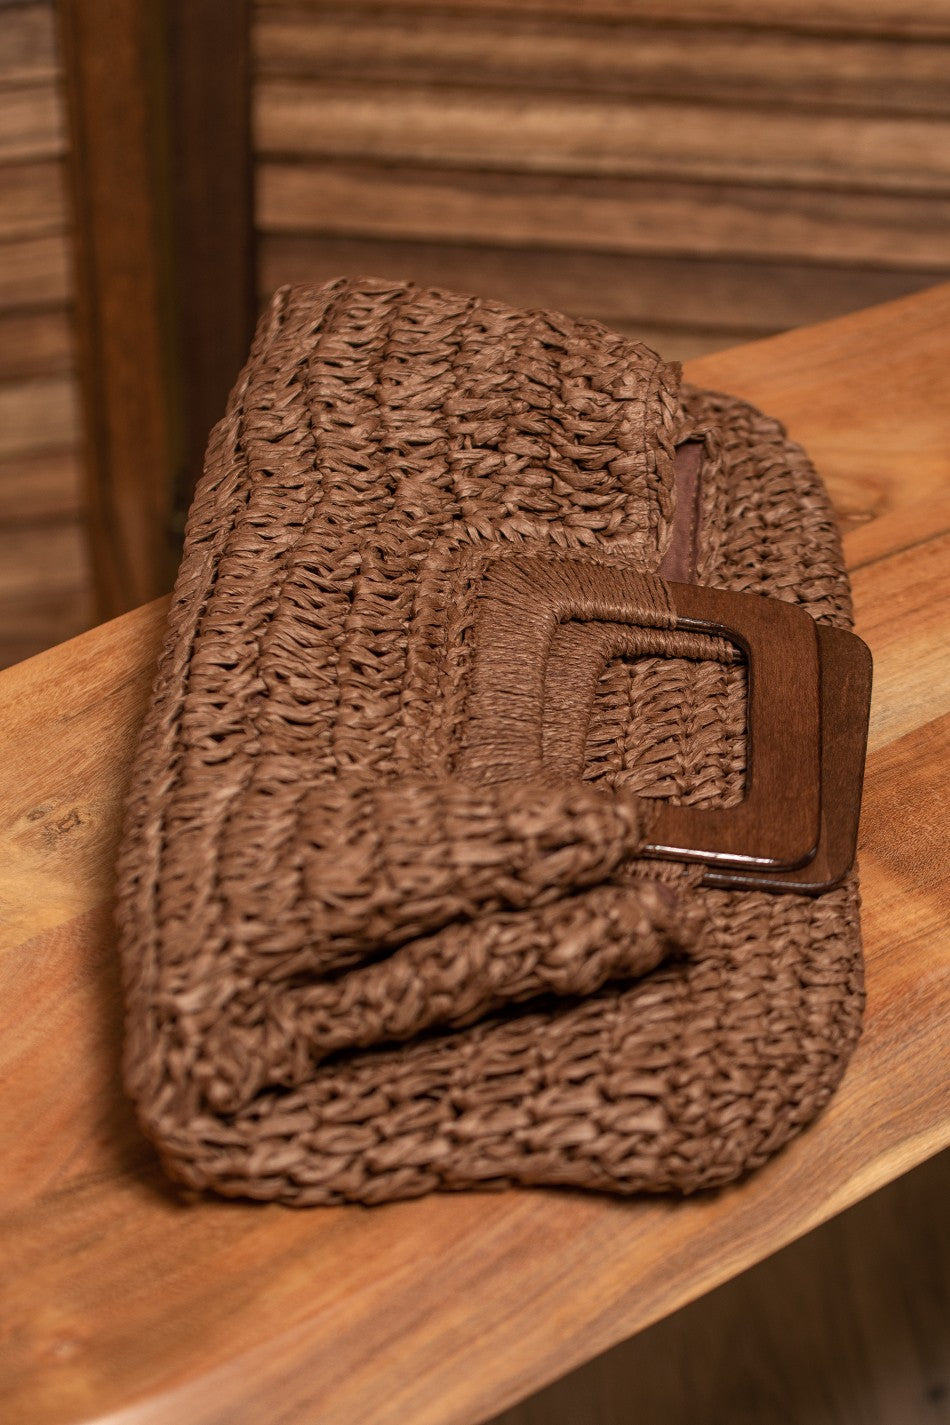 Cotton crochet tote bag with wood handle – Splurg'd Studio